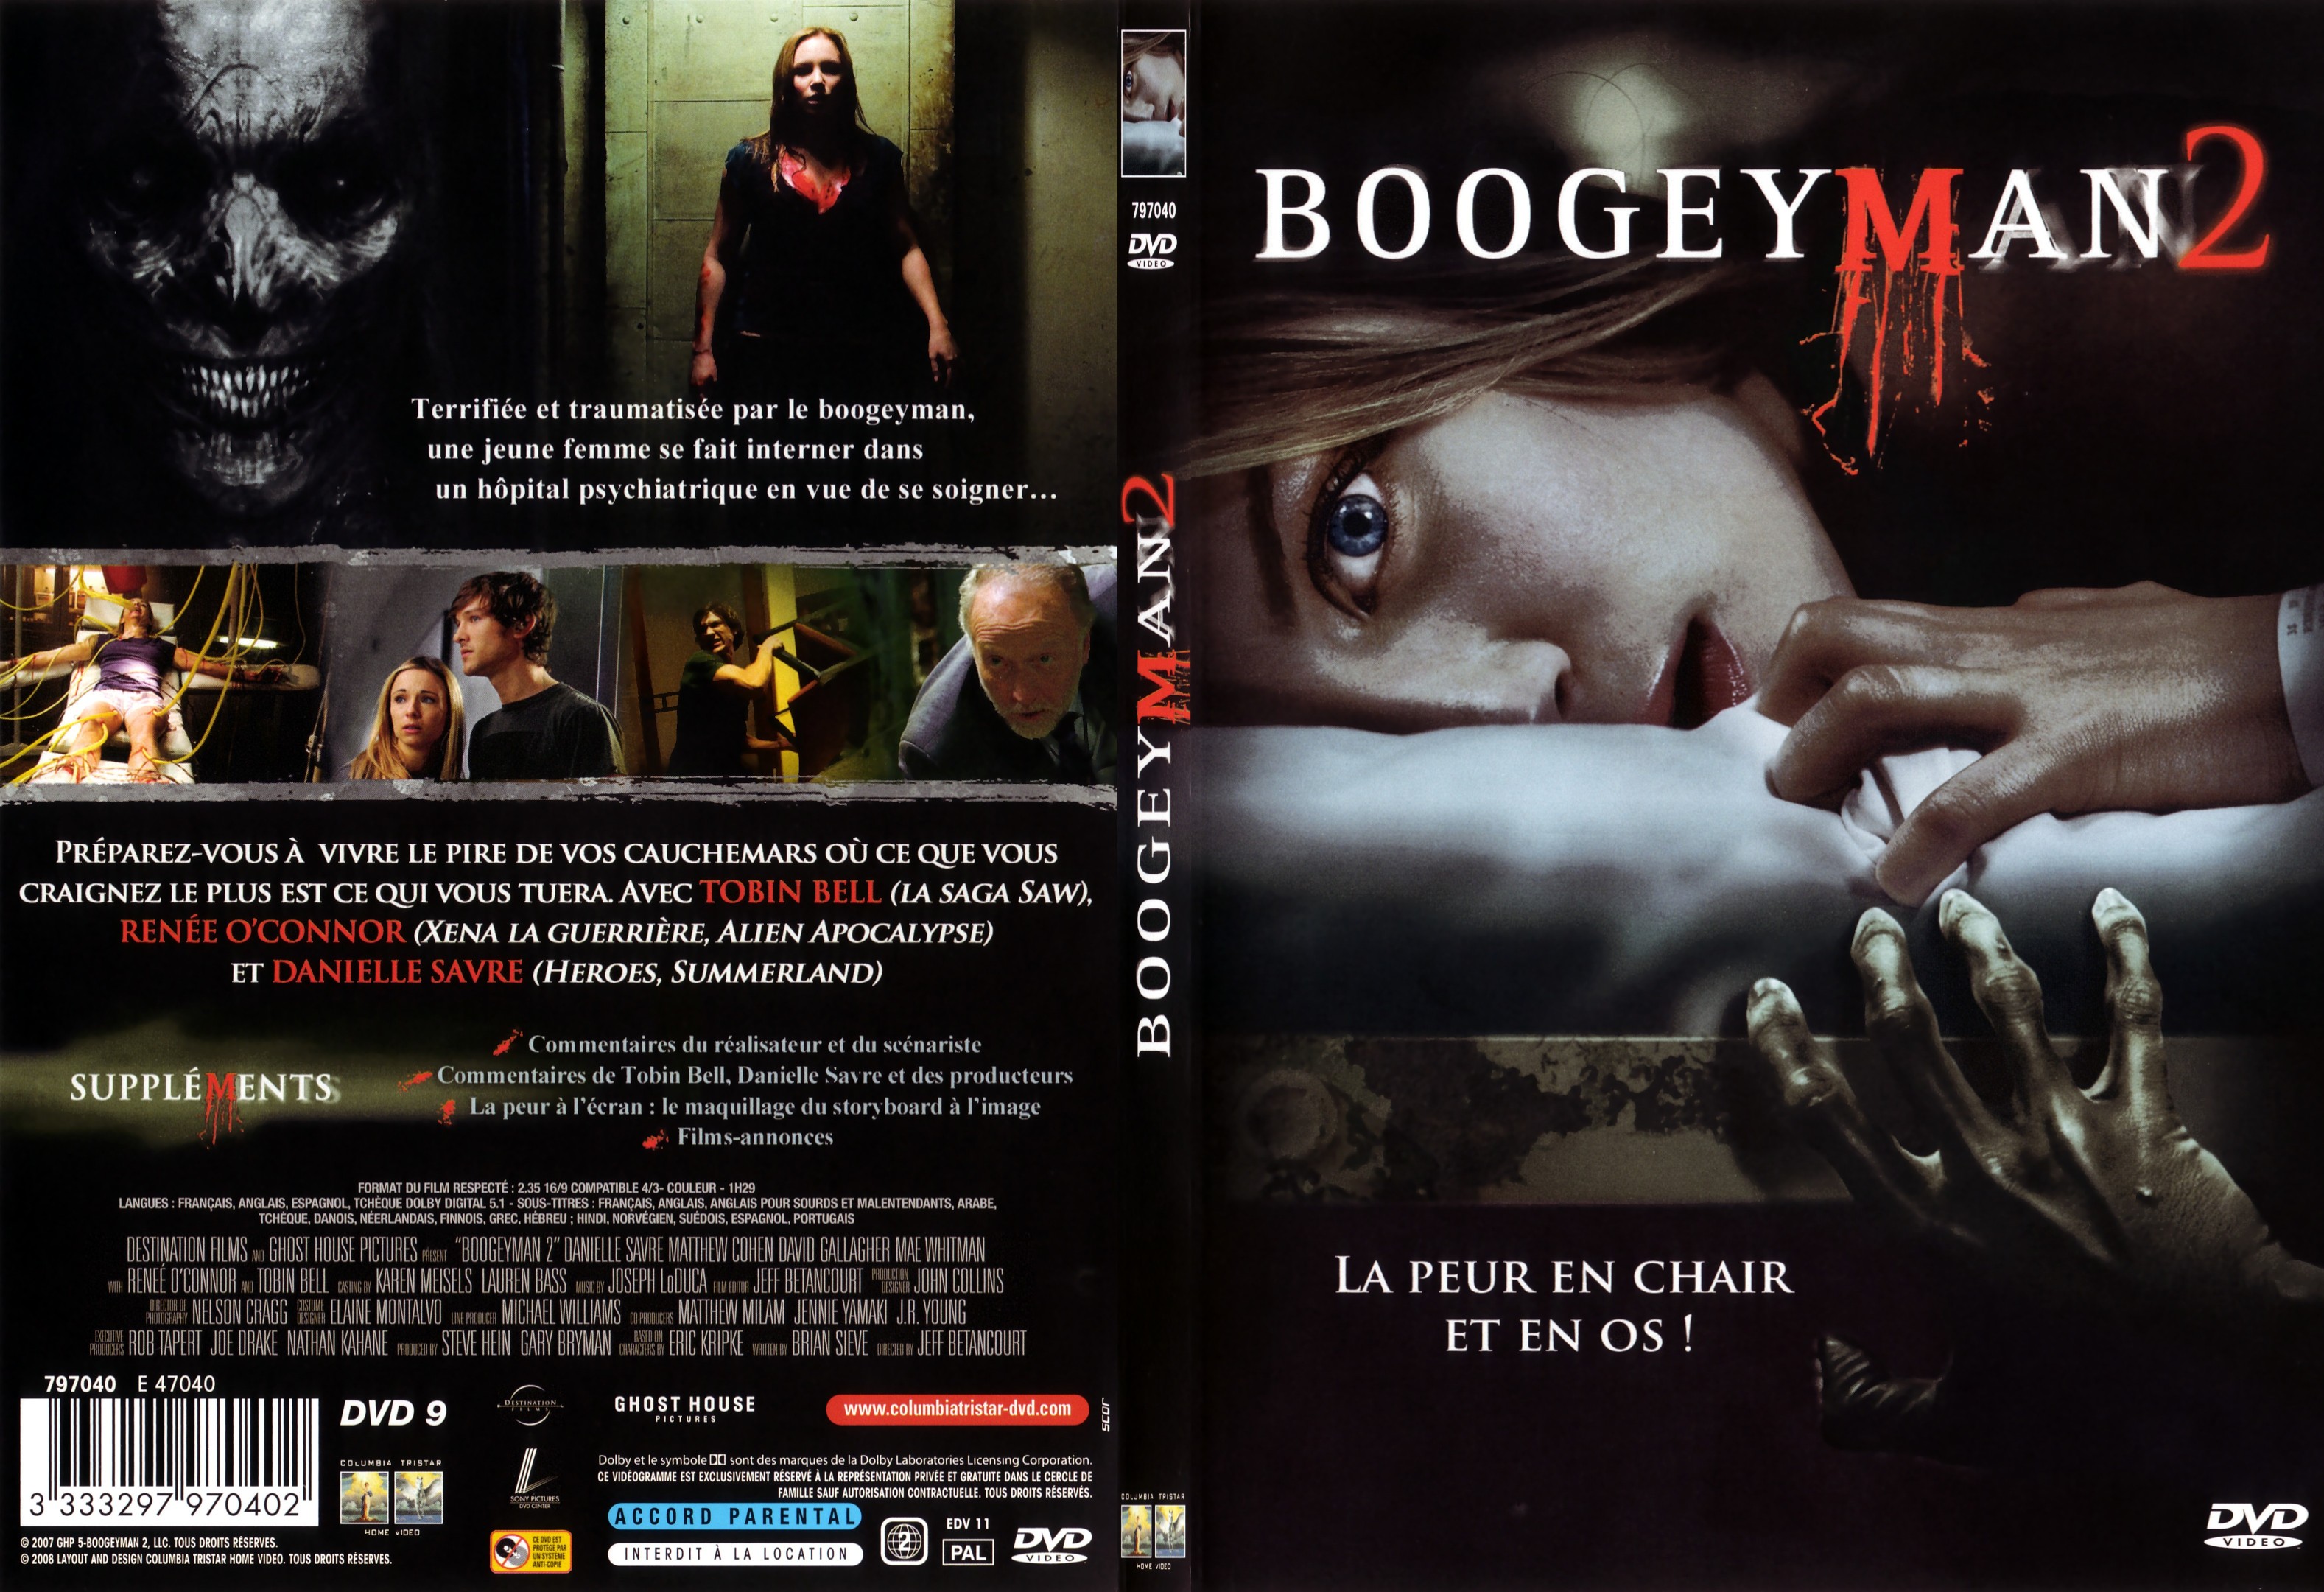 Jaquette DVD Boogeyman 2 - SLIM